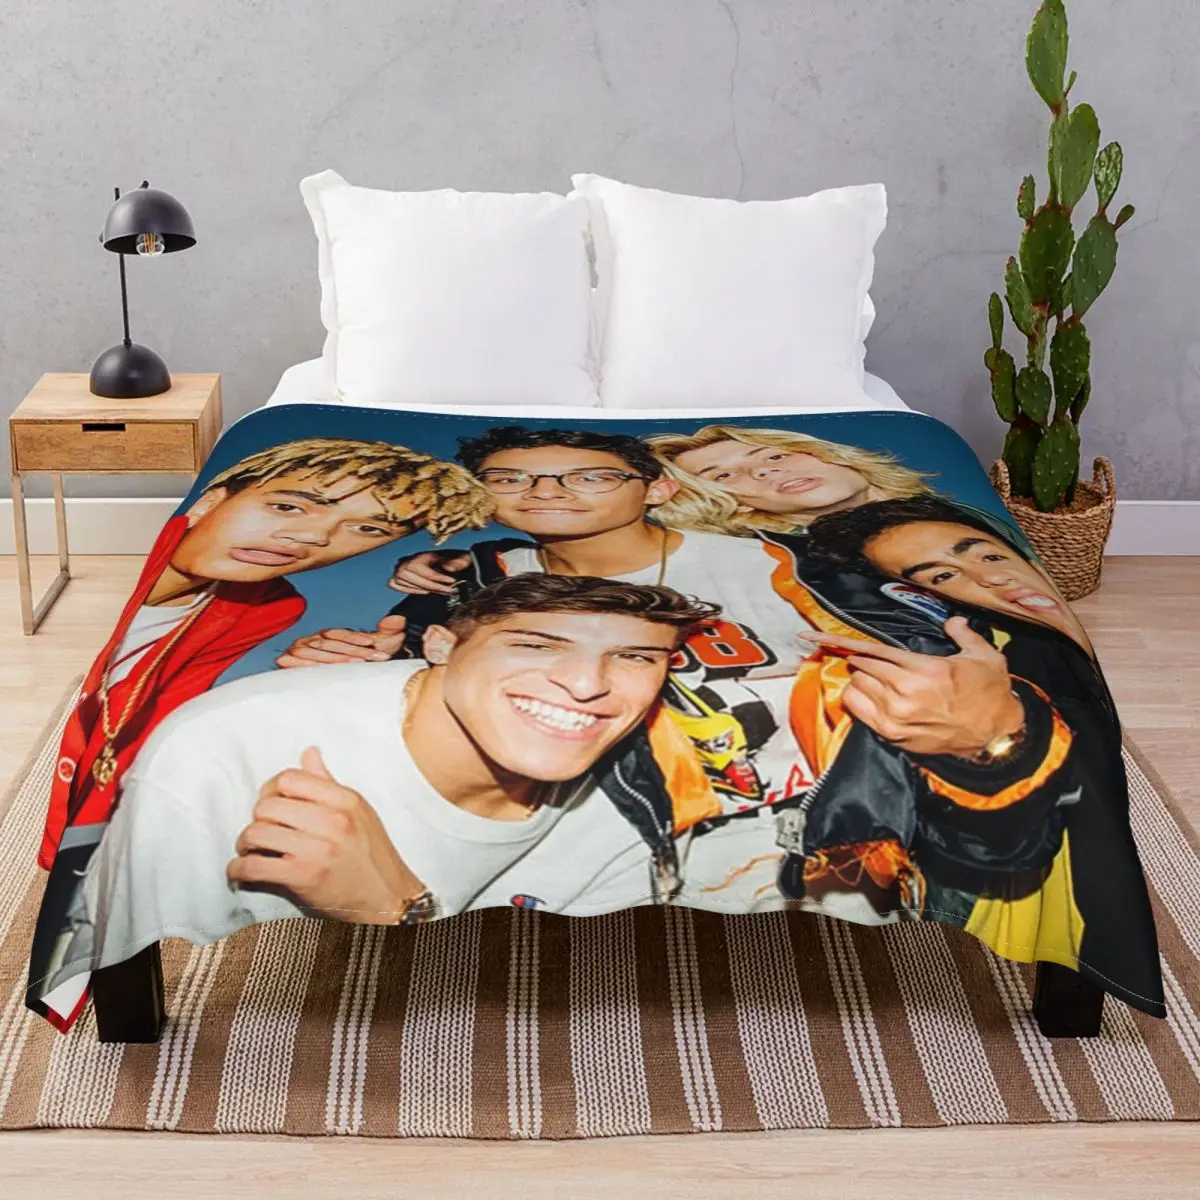 PrettyMuch Merchandise Blanket Flannel Textile Decor Comfortable Throw Blankets for Bedding Sofa Camp Cinema